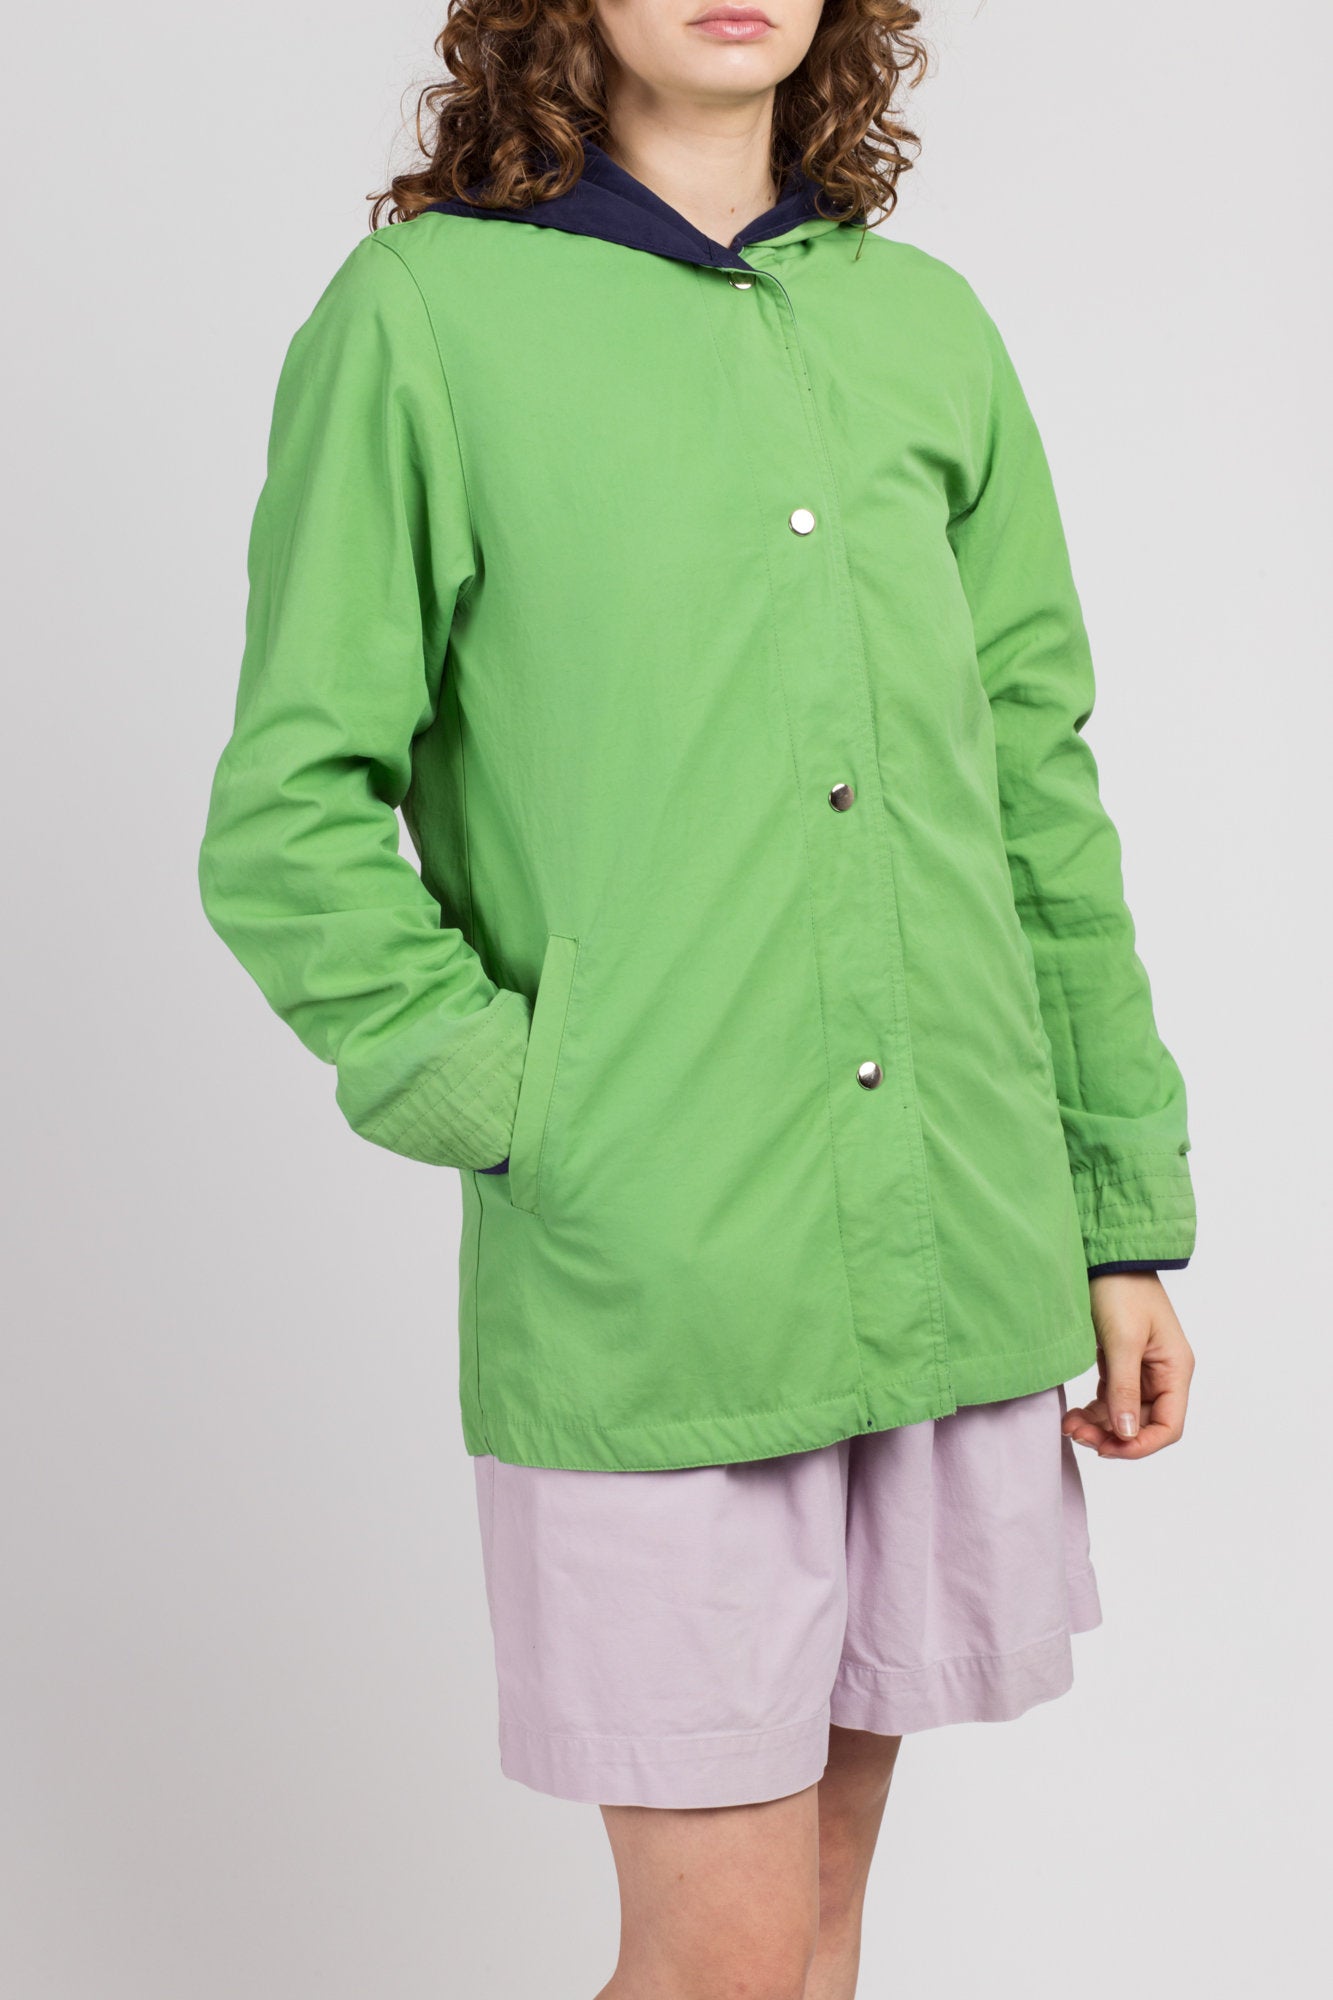 90s Purple and Green Reversible Jacket - Medium